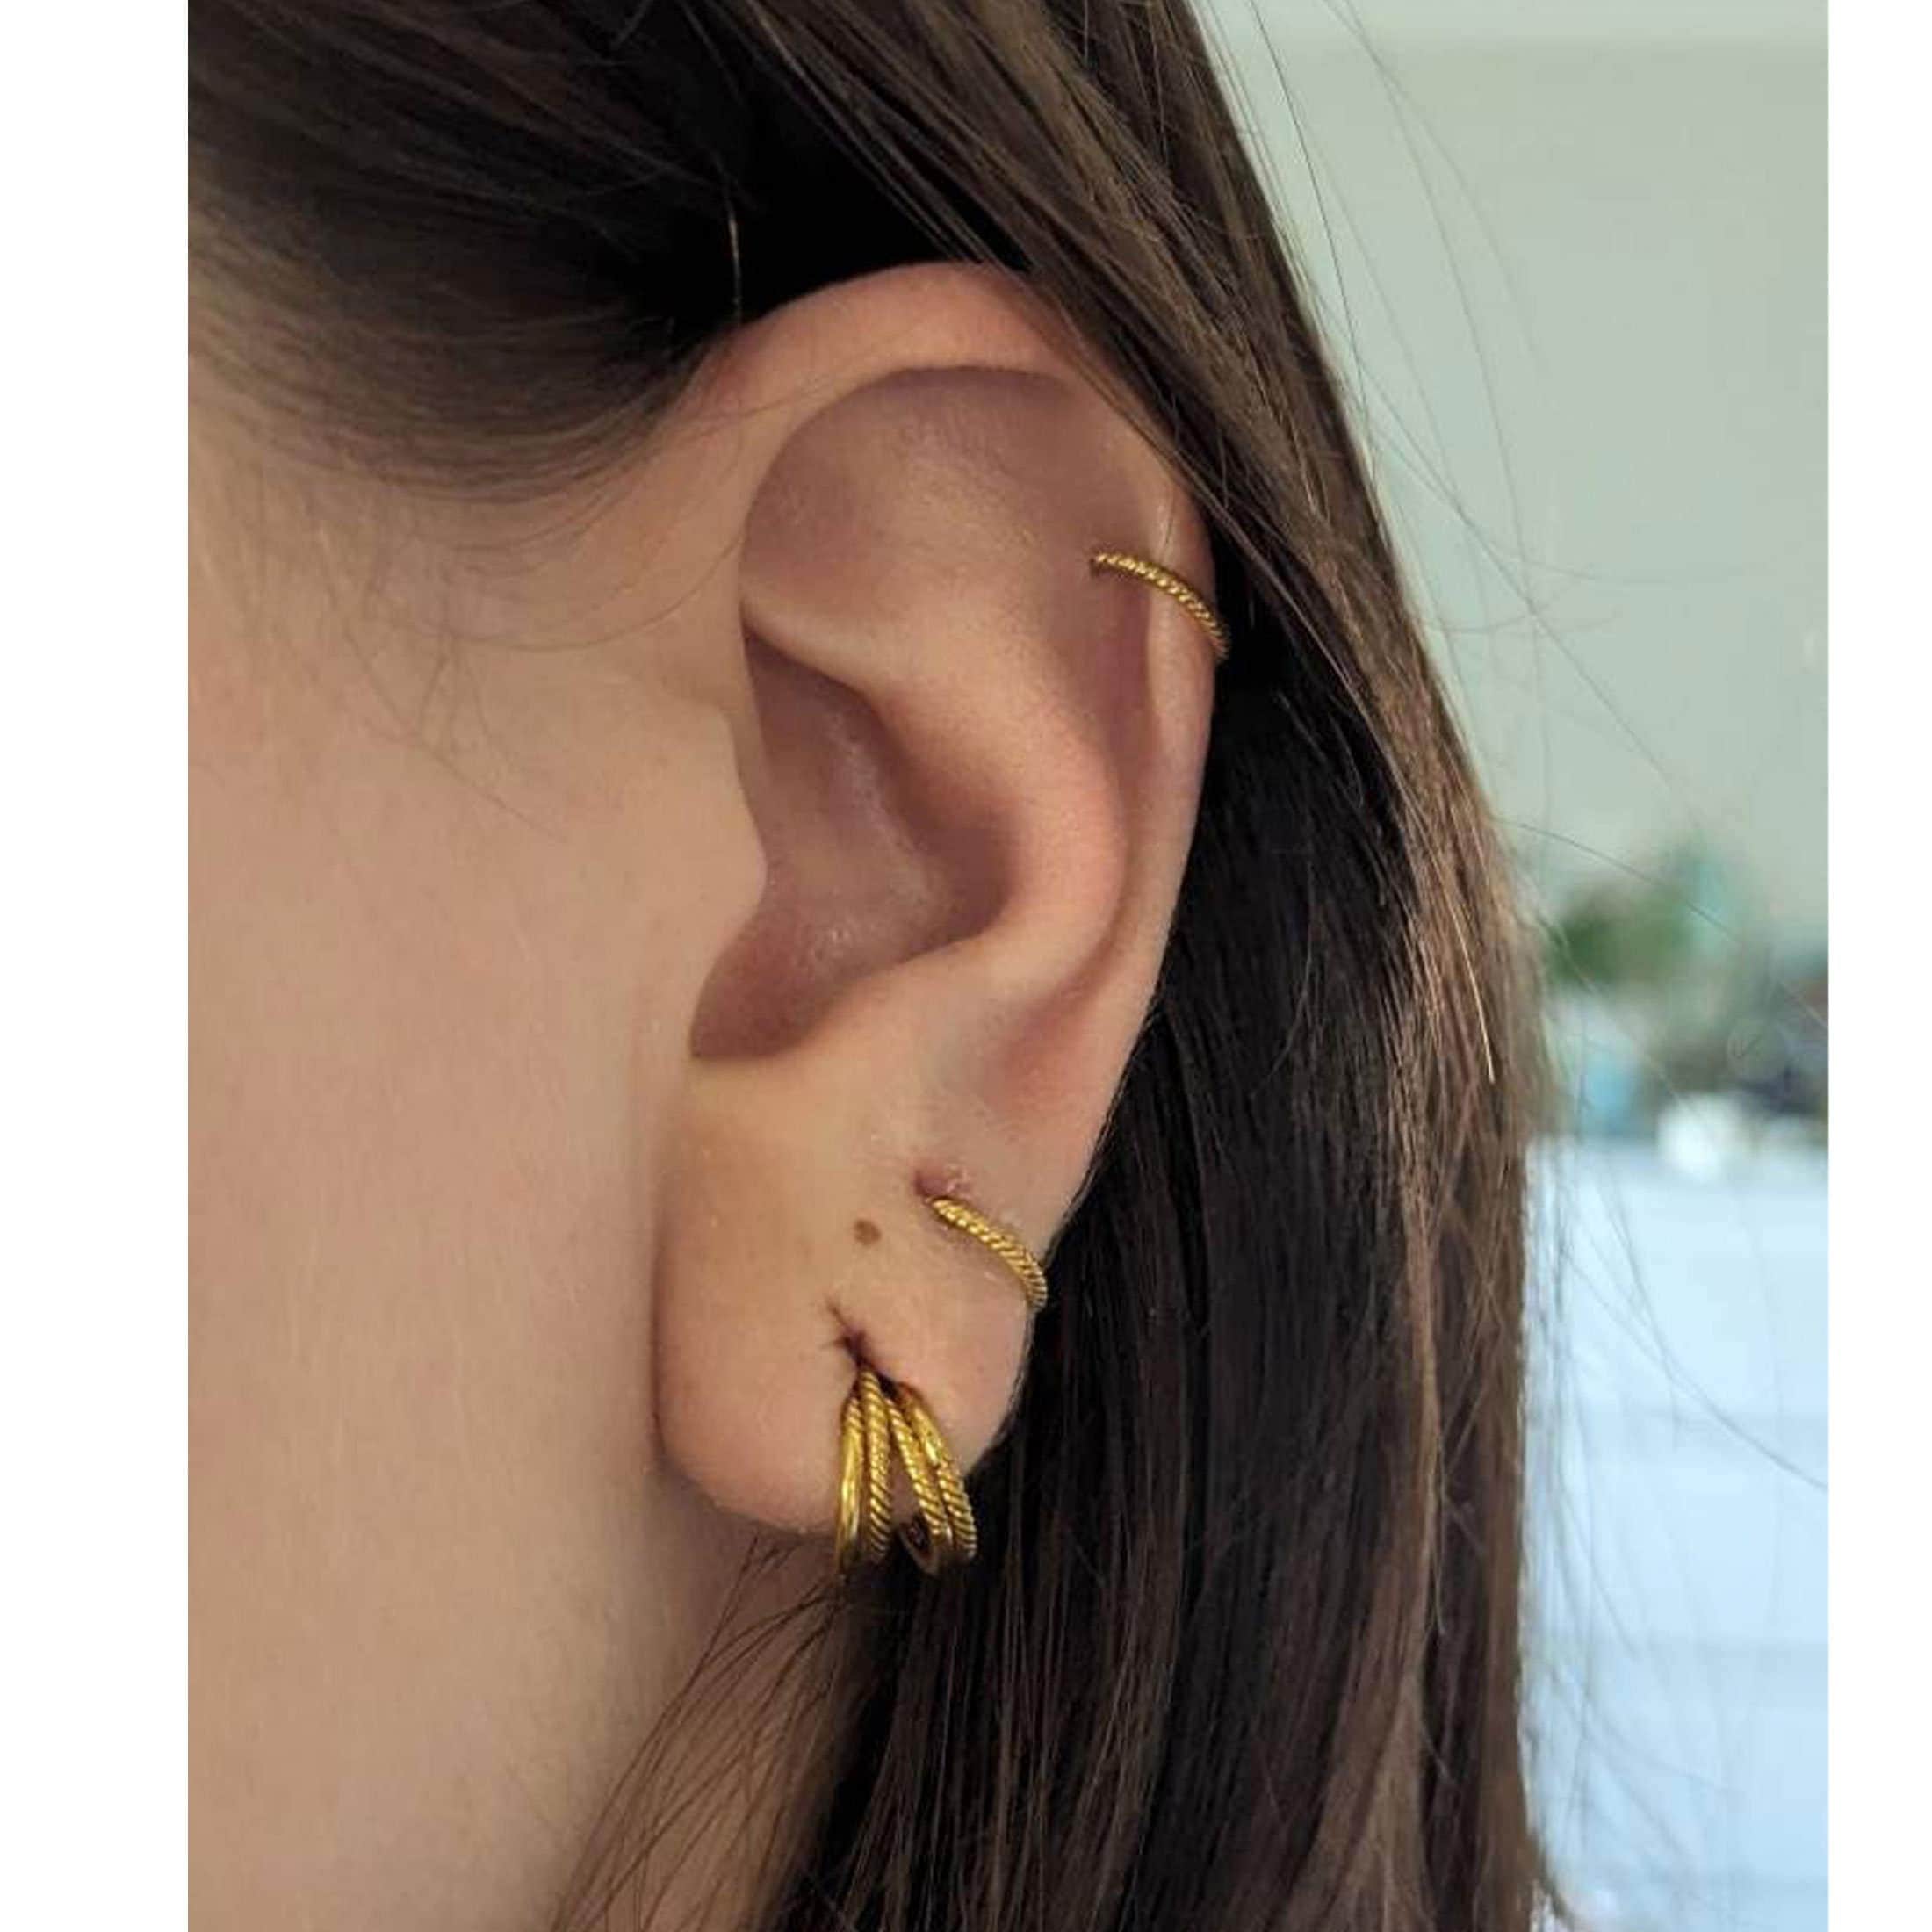 Lobe Logic Heavy Earring Holder Hanger Ear Relief Support Hooks Choose from: Gold, Silver, Bronze & Black